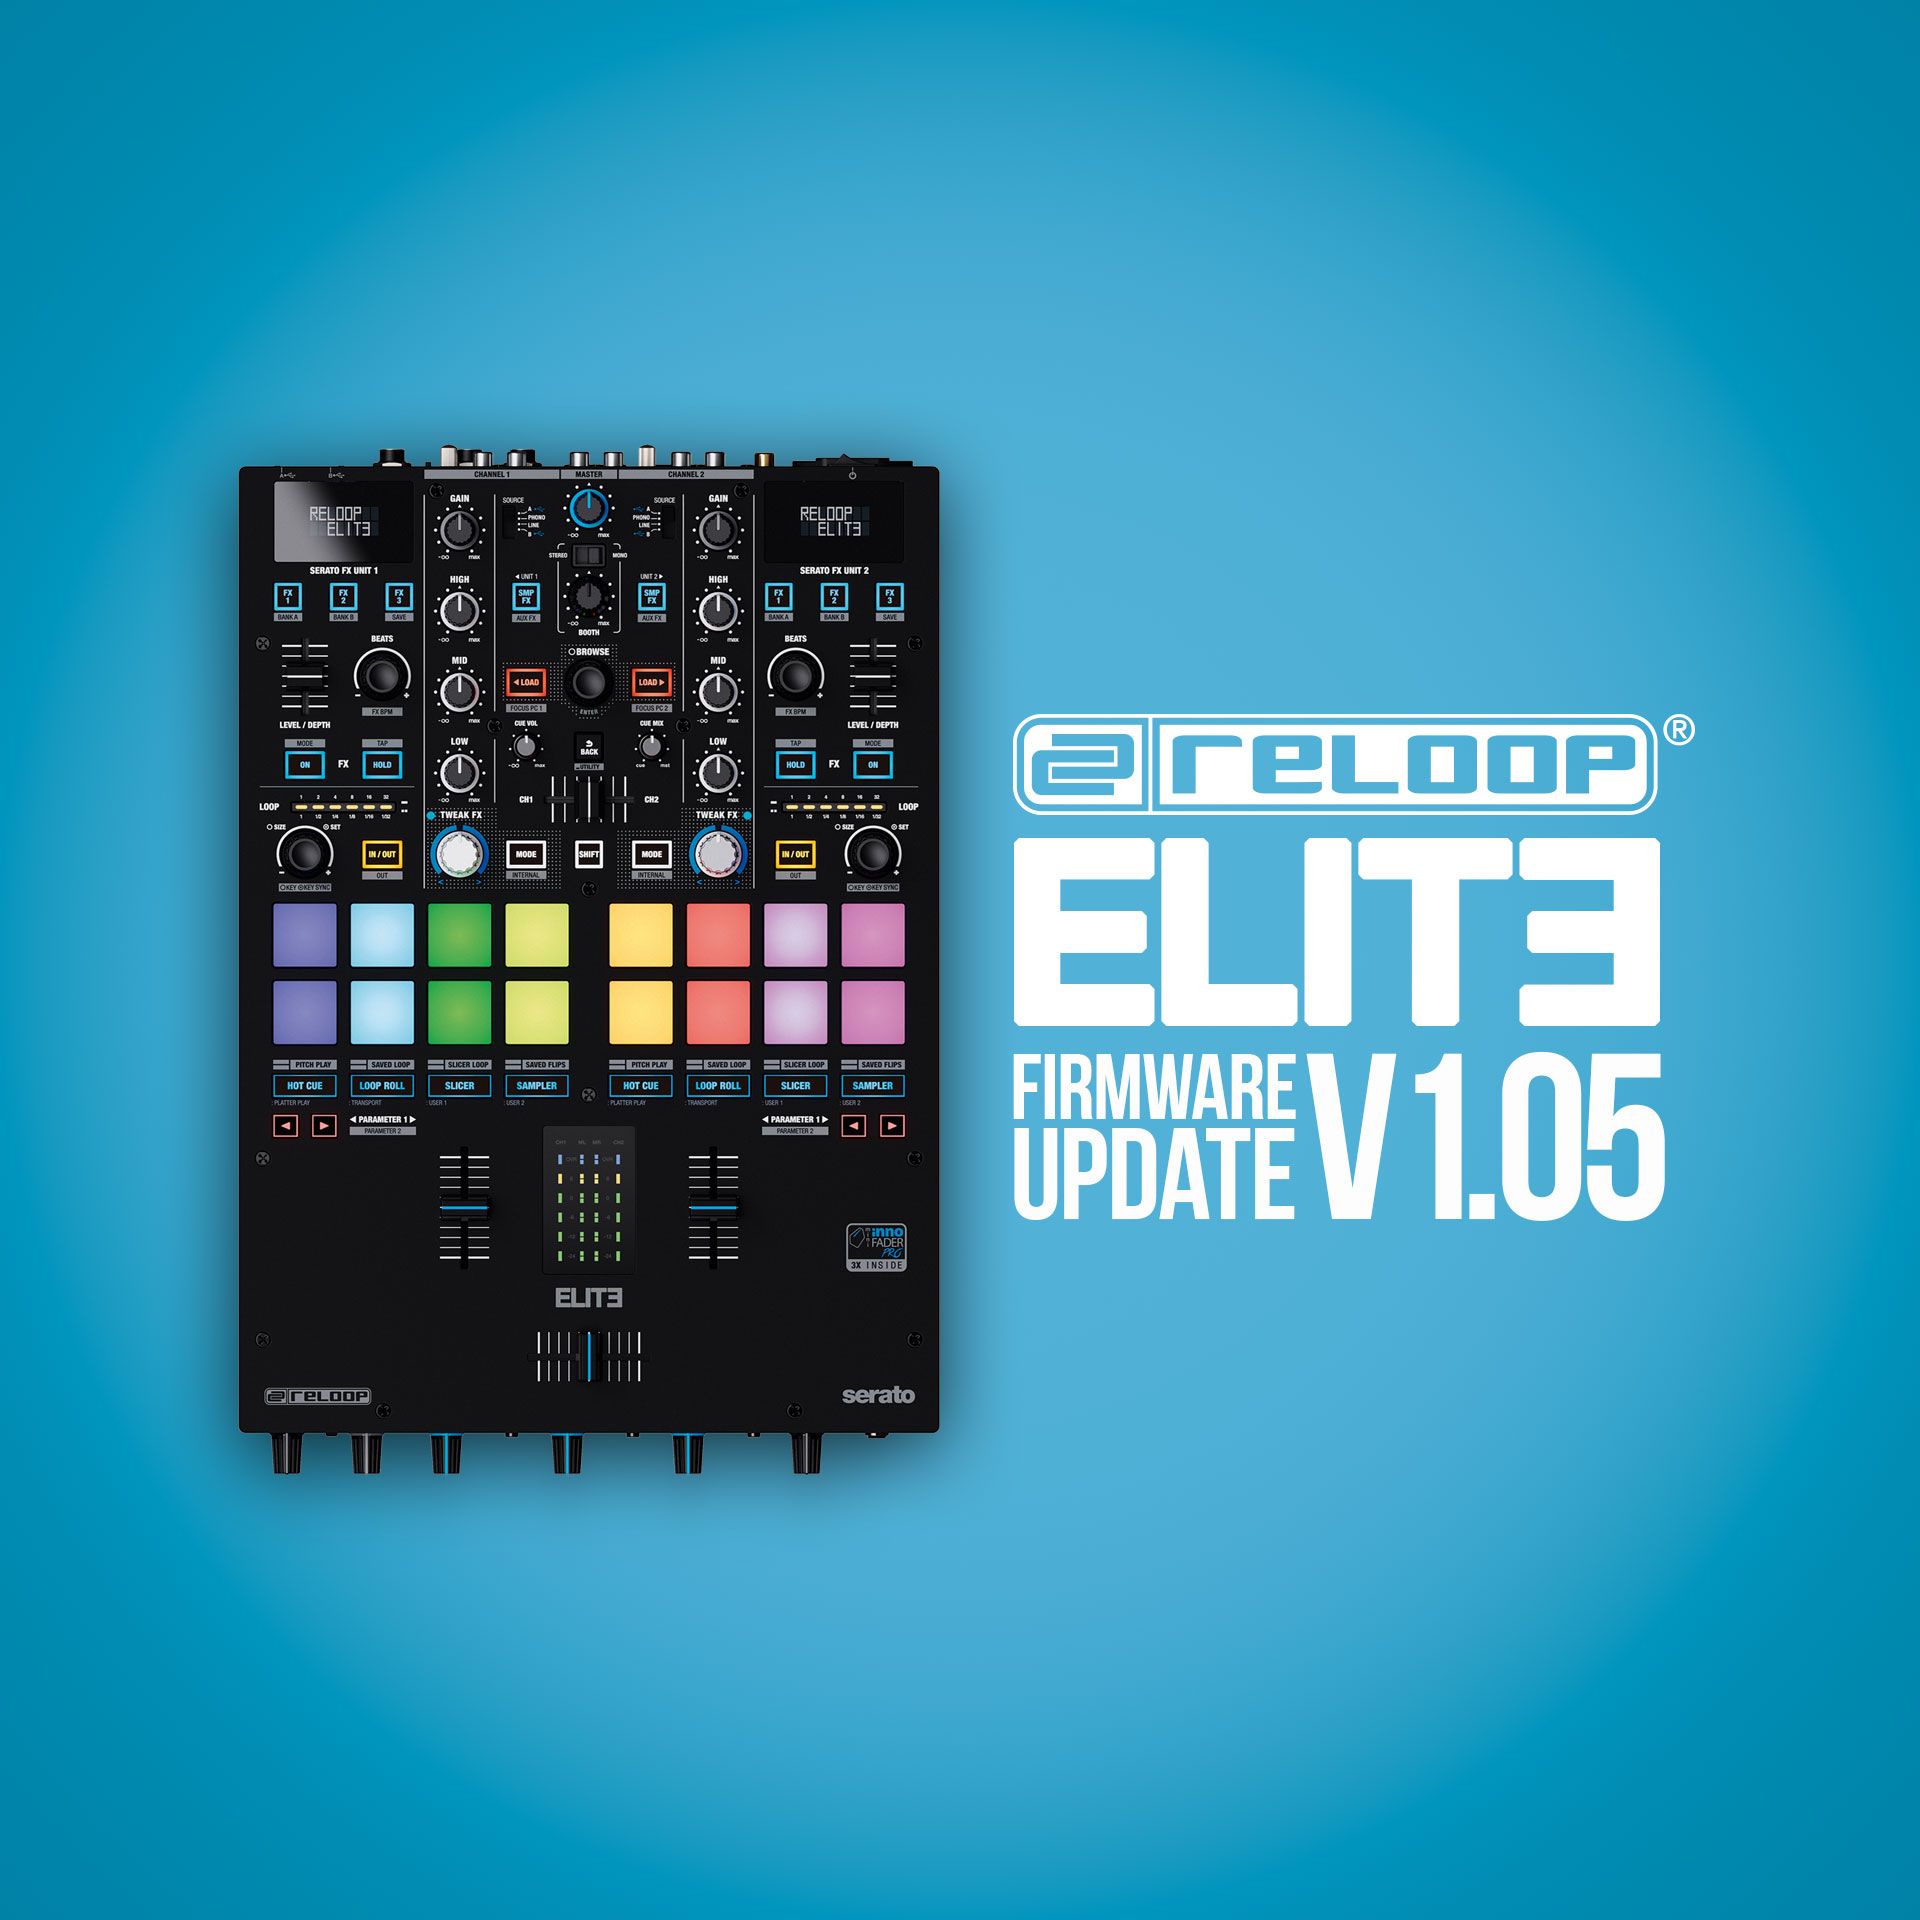 NEW ELITE firmware V1.05 available!